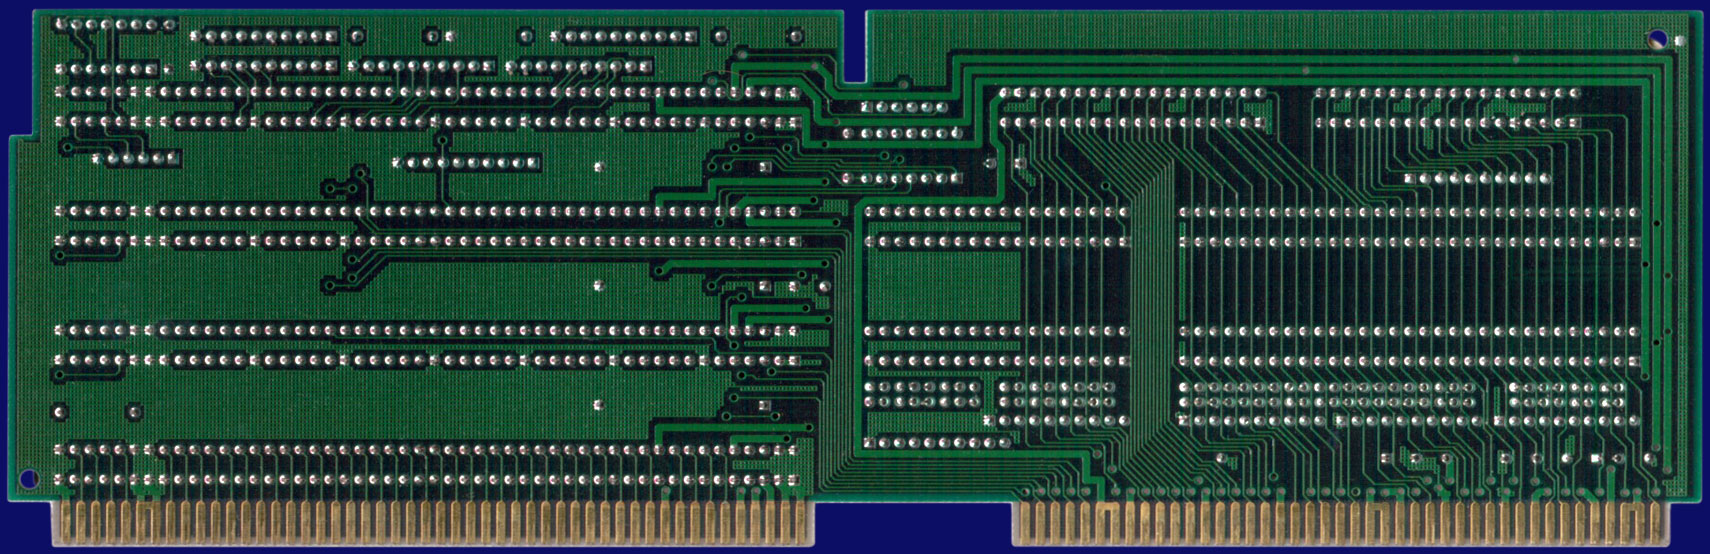 Commodore Amiga 3000 - Rev 9.3 motherboard, rev 7.1 daughter board, back side